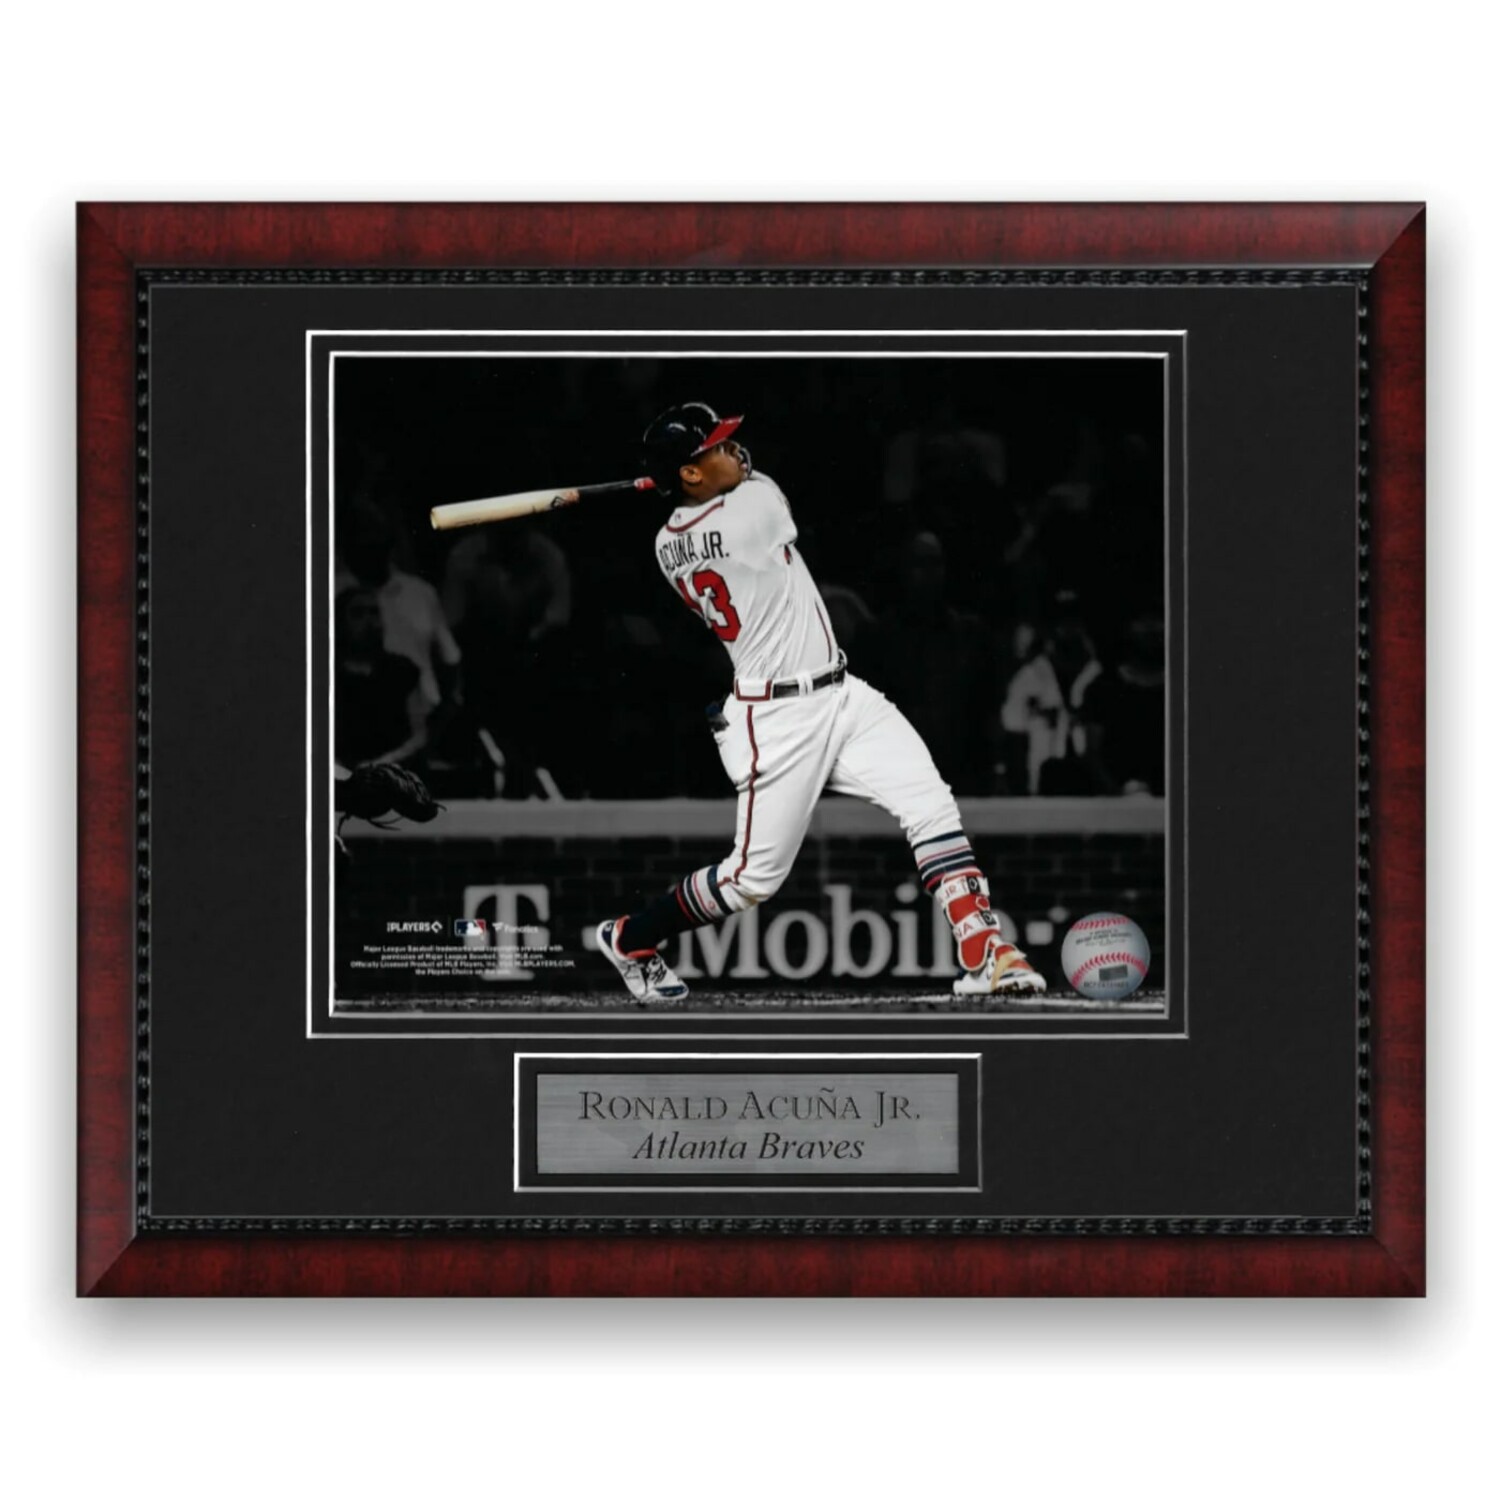  Ronald Acuna Jr. Baseball Cards (5) ASSORTED Atlanta